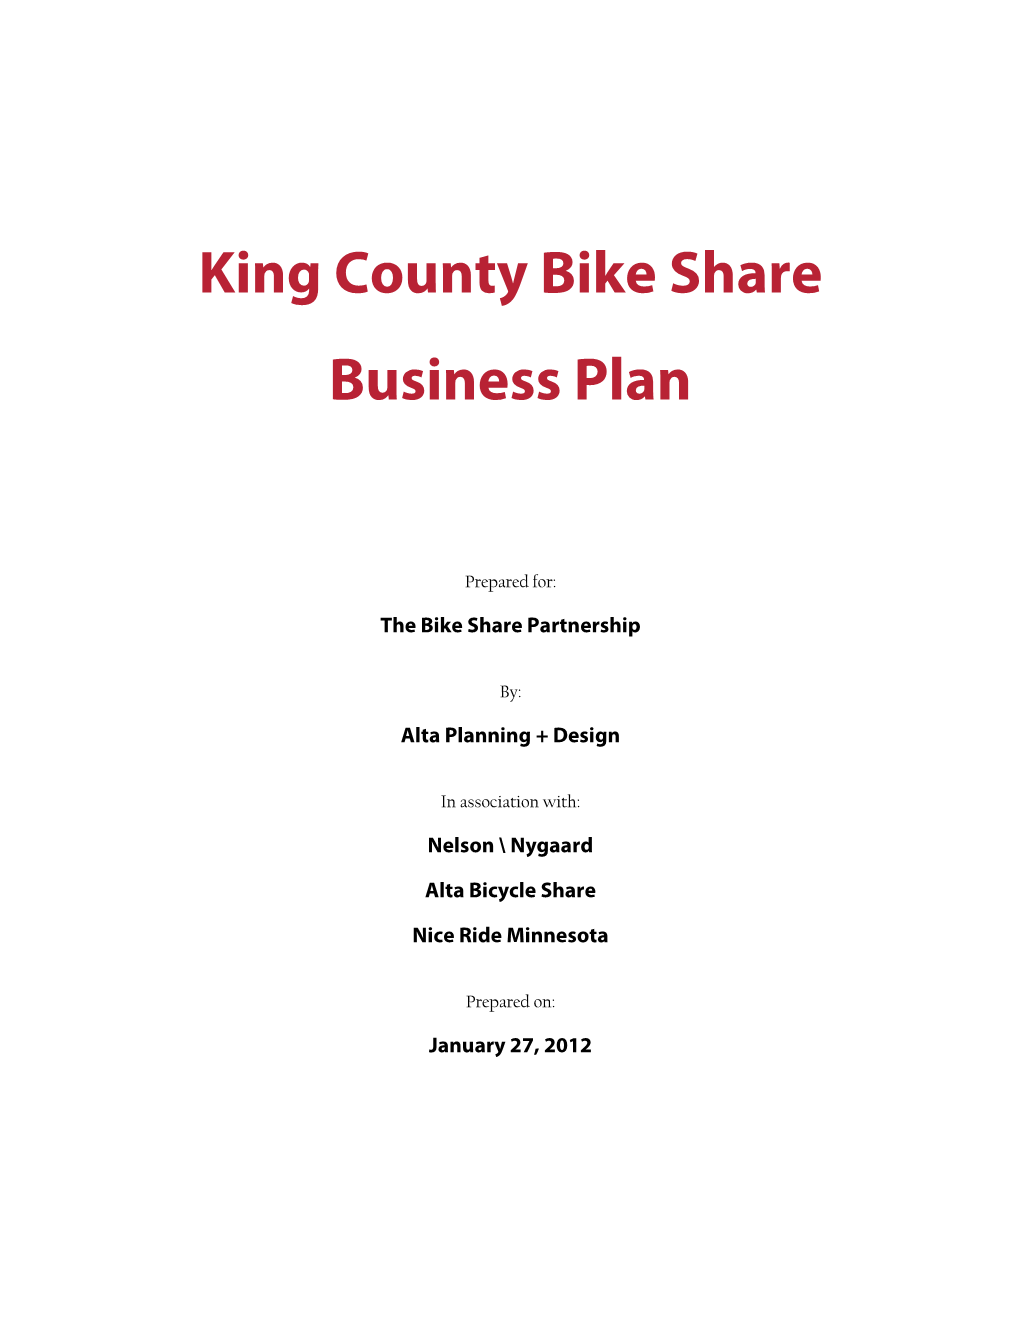 King County Bike Share Business Plan